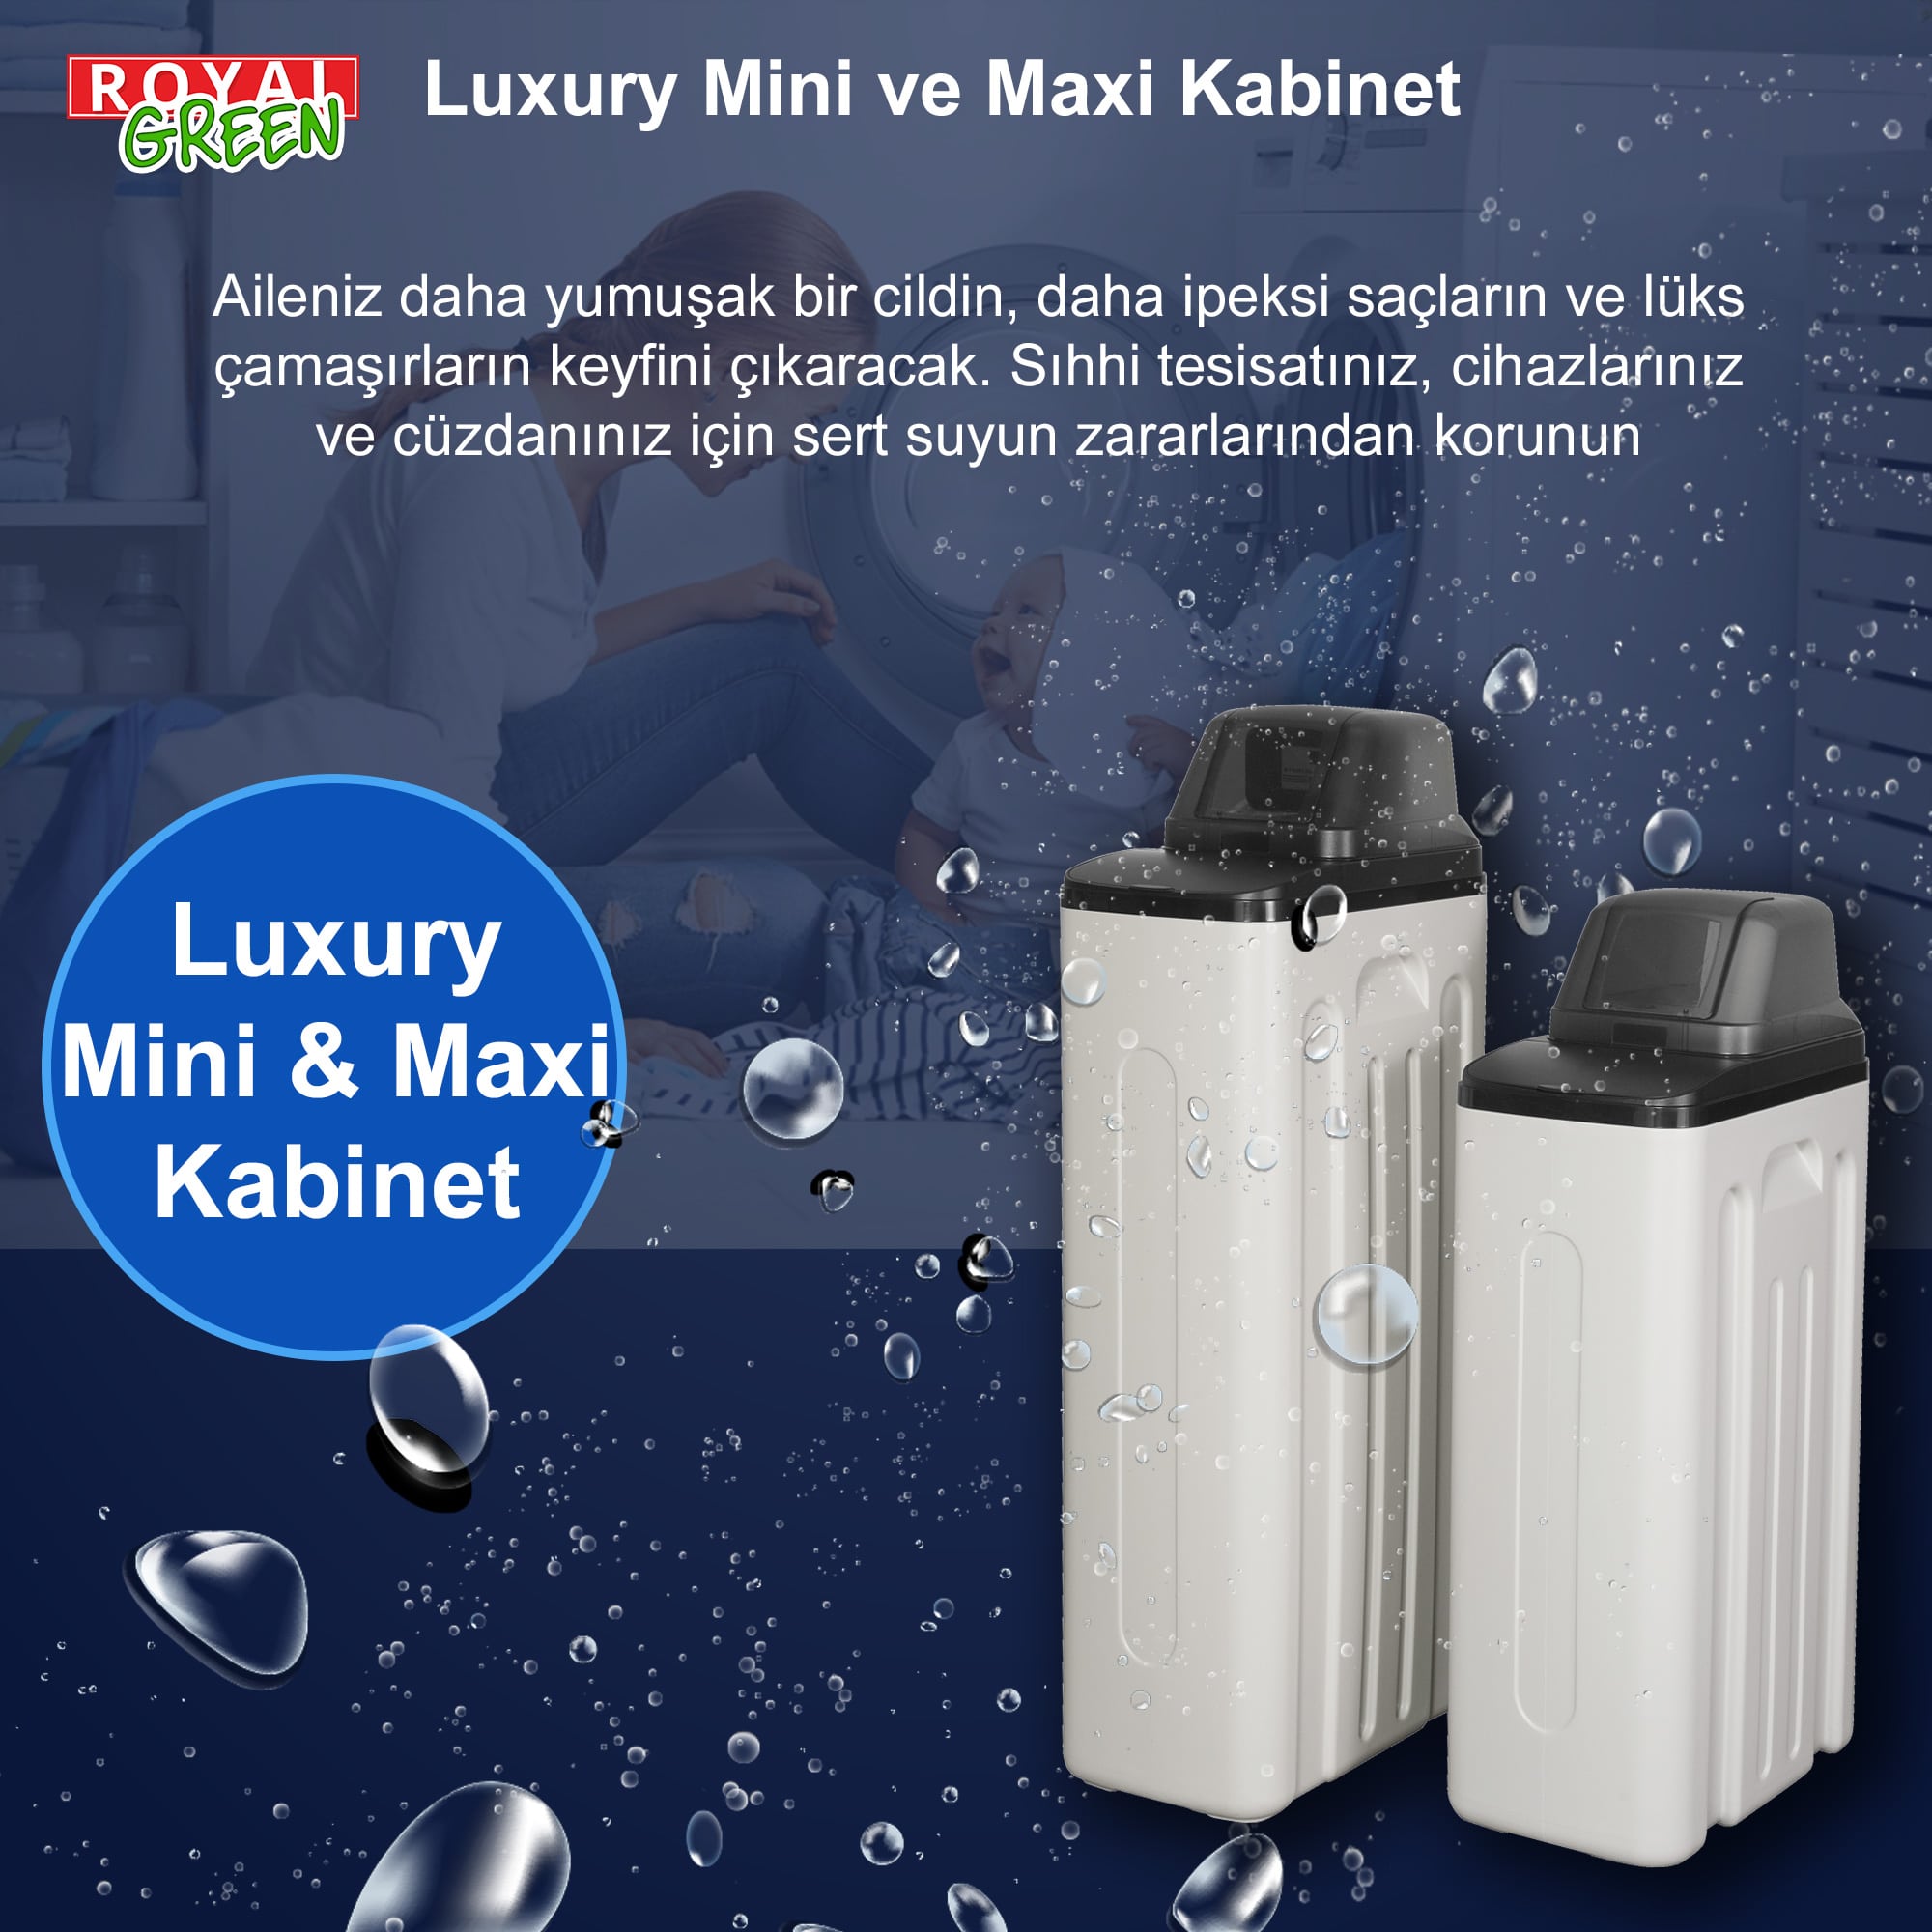 Luxury Mini & Maxi Kabinet Banneri